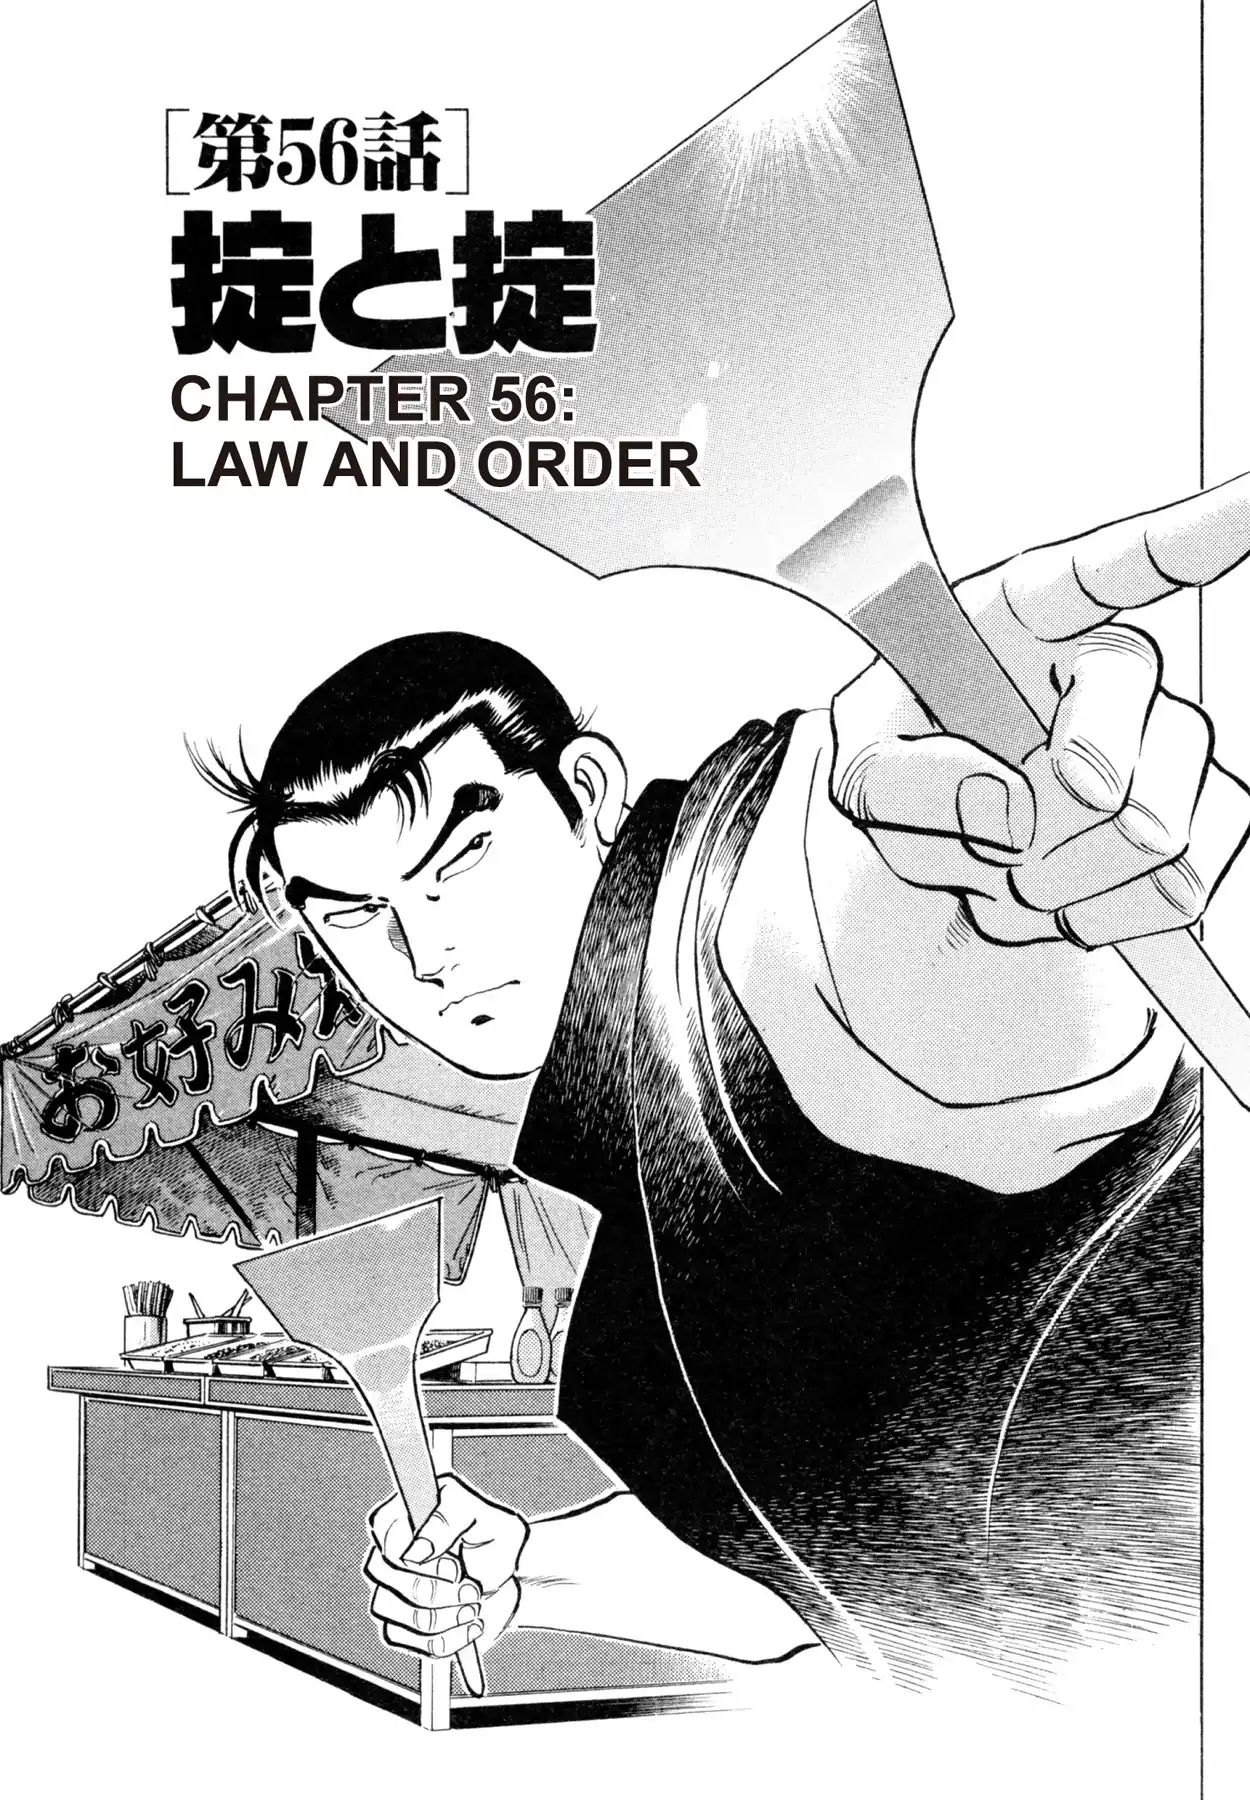 Shoku King VOL.7 CHAPTER 56: LAW AND ORDER